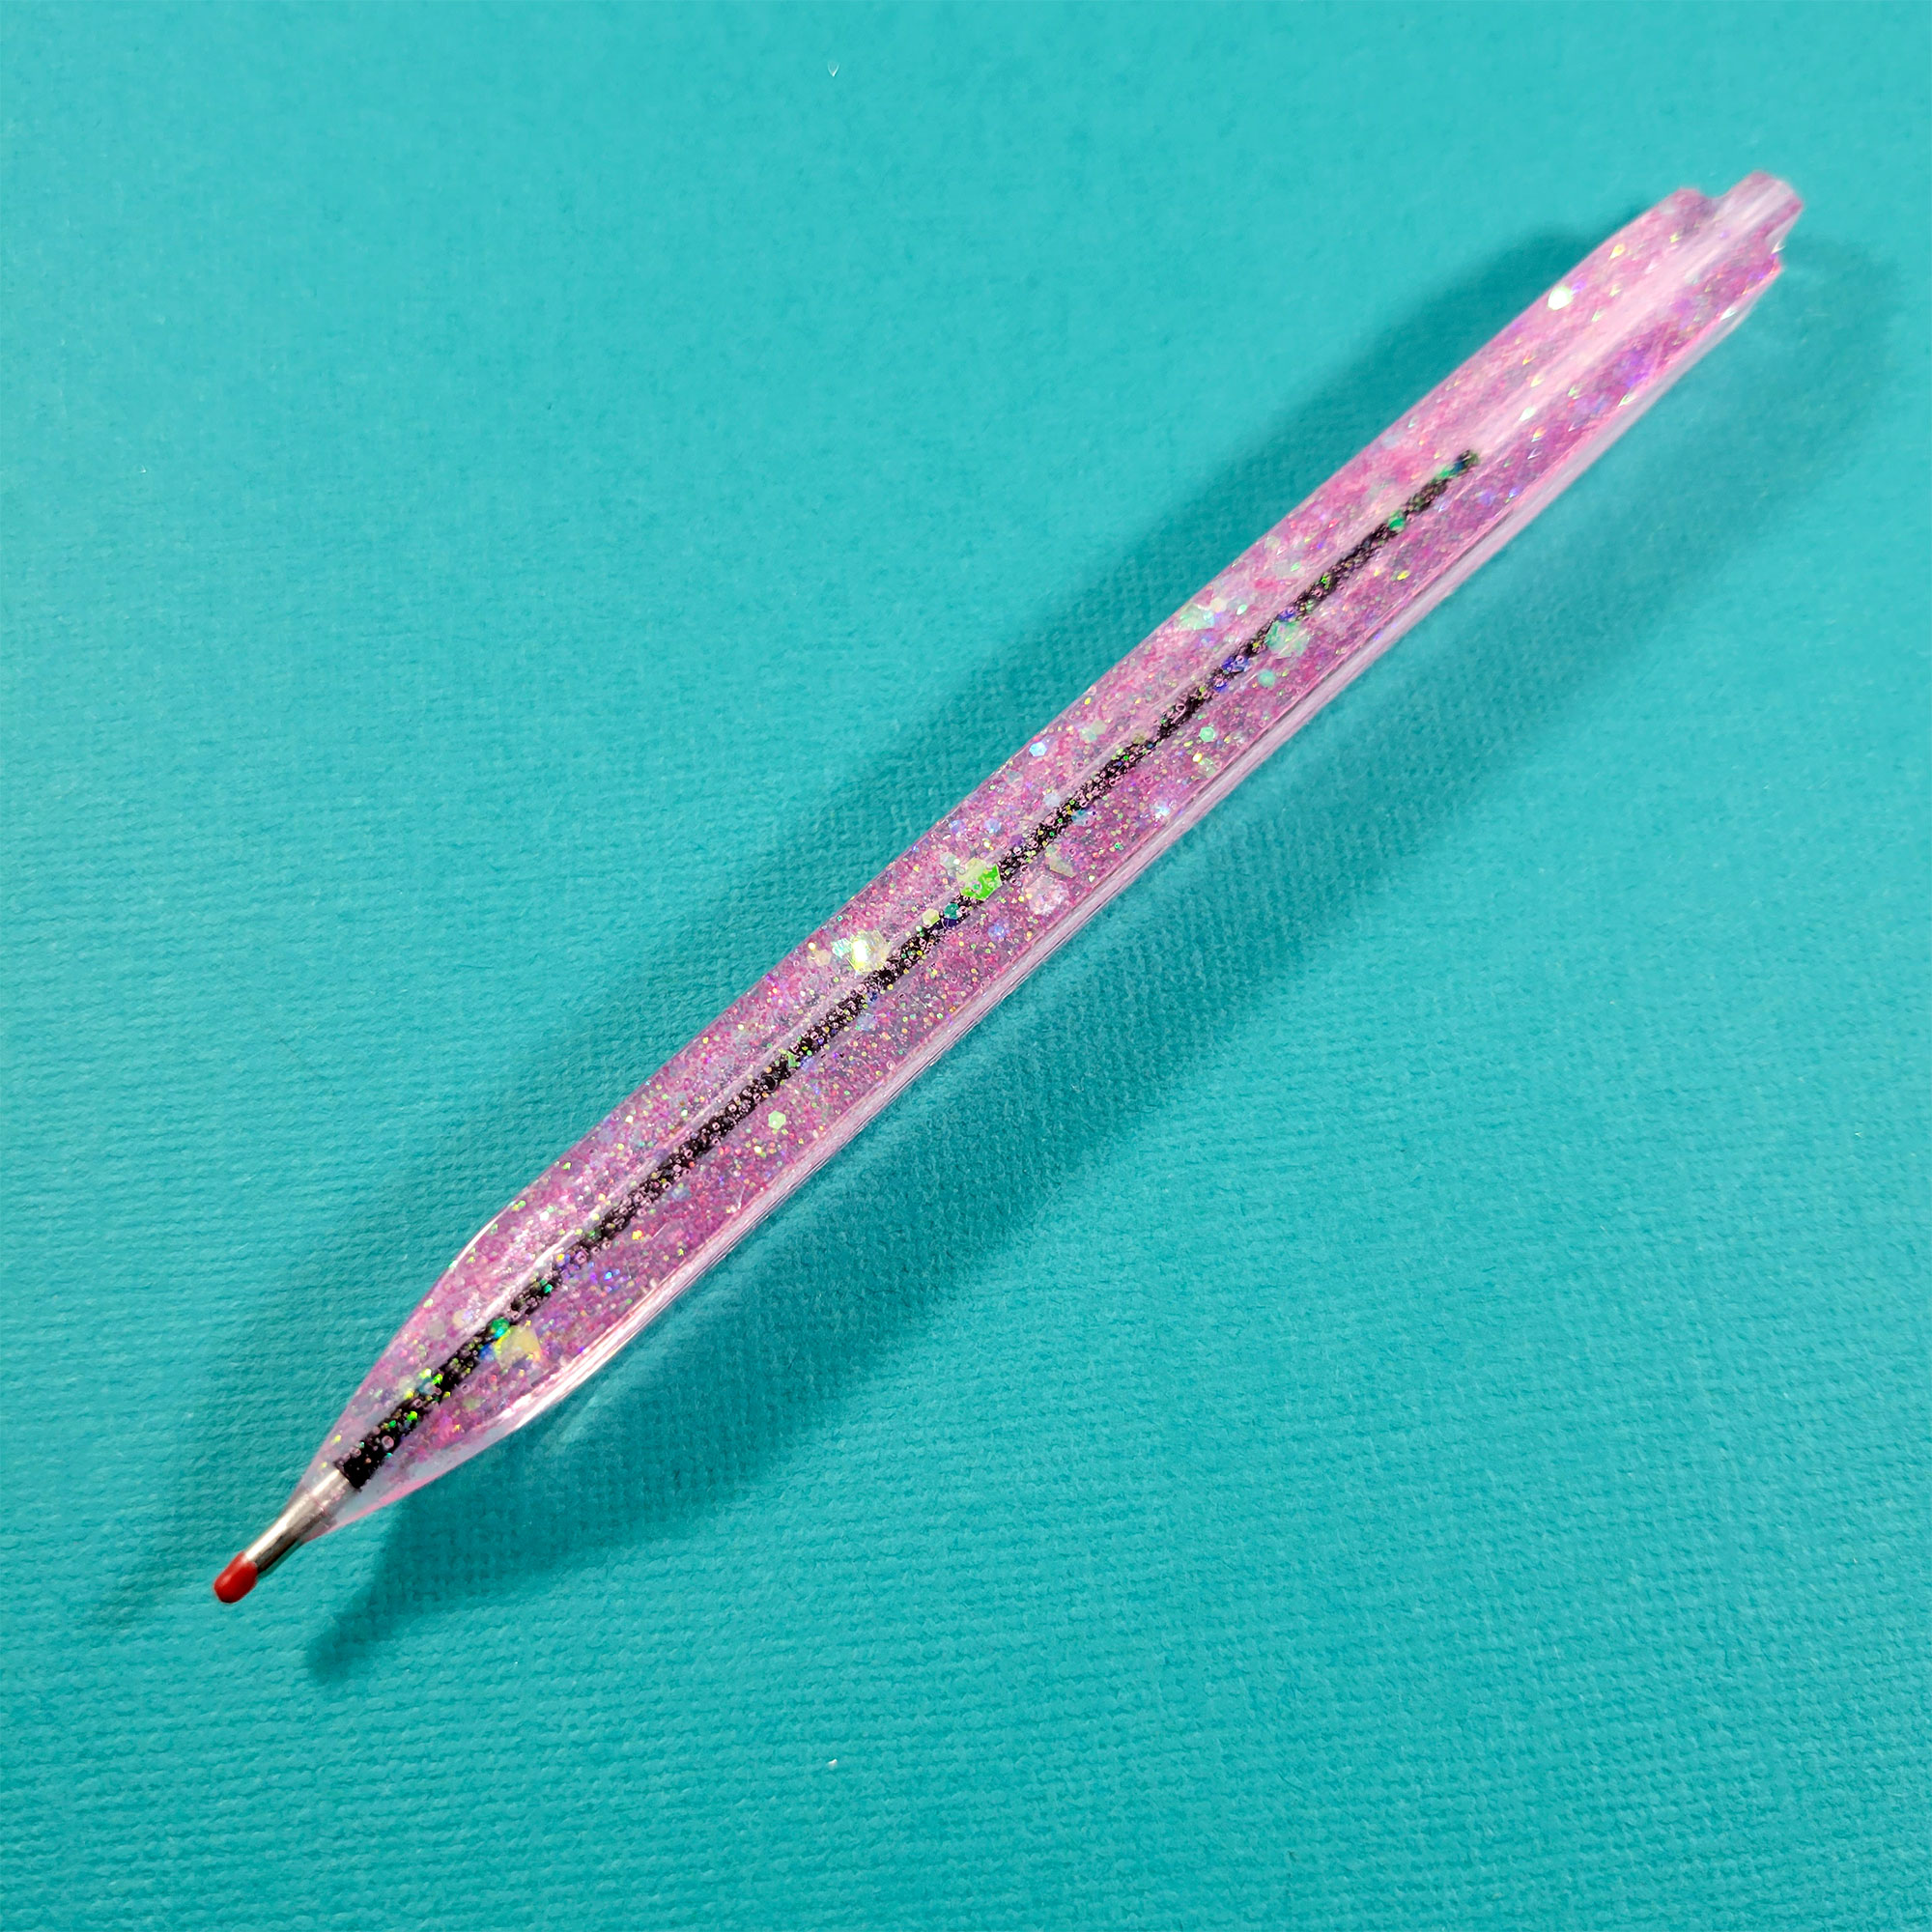 Glittery Pink Handmade Ball Point Pen by Wilde Designs